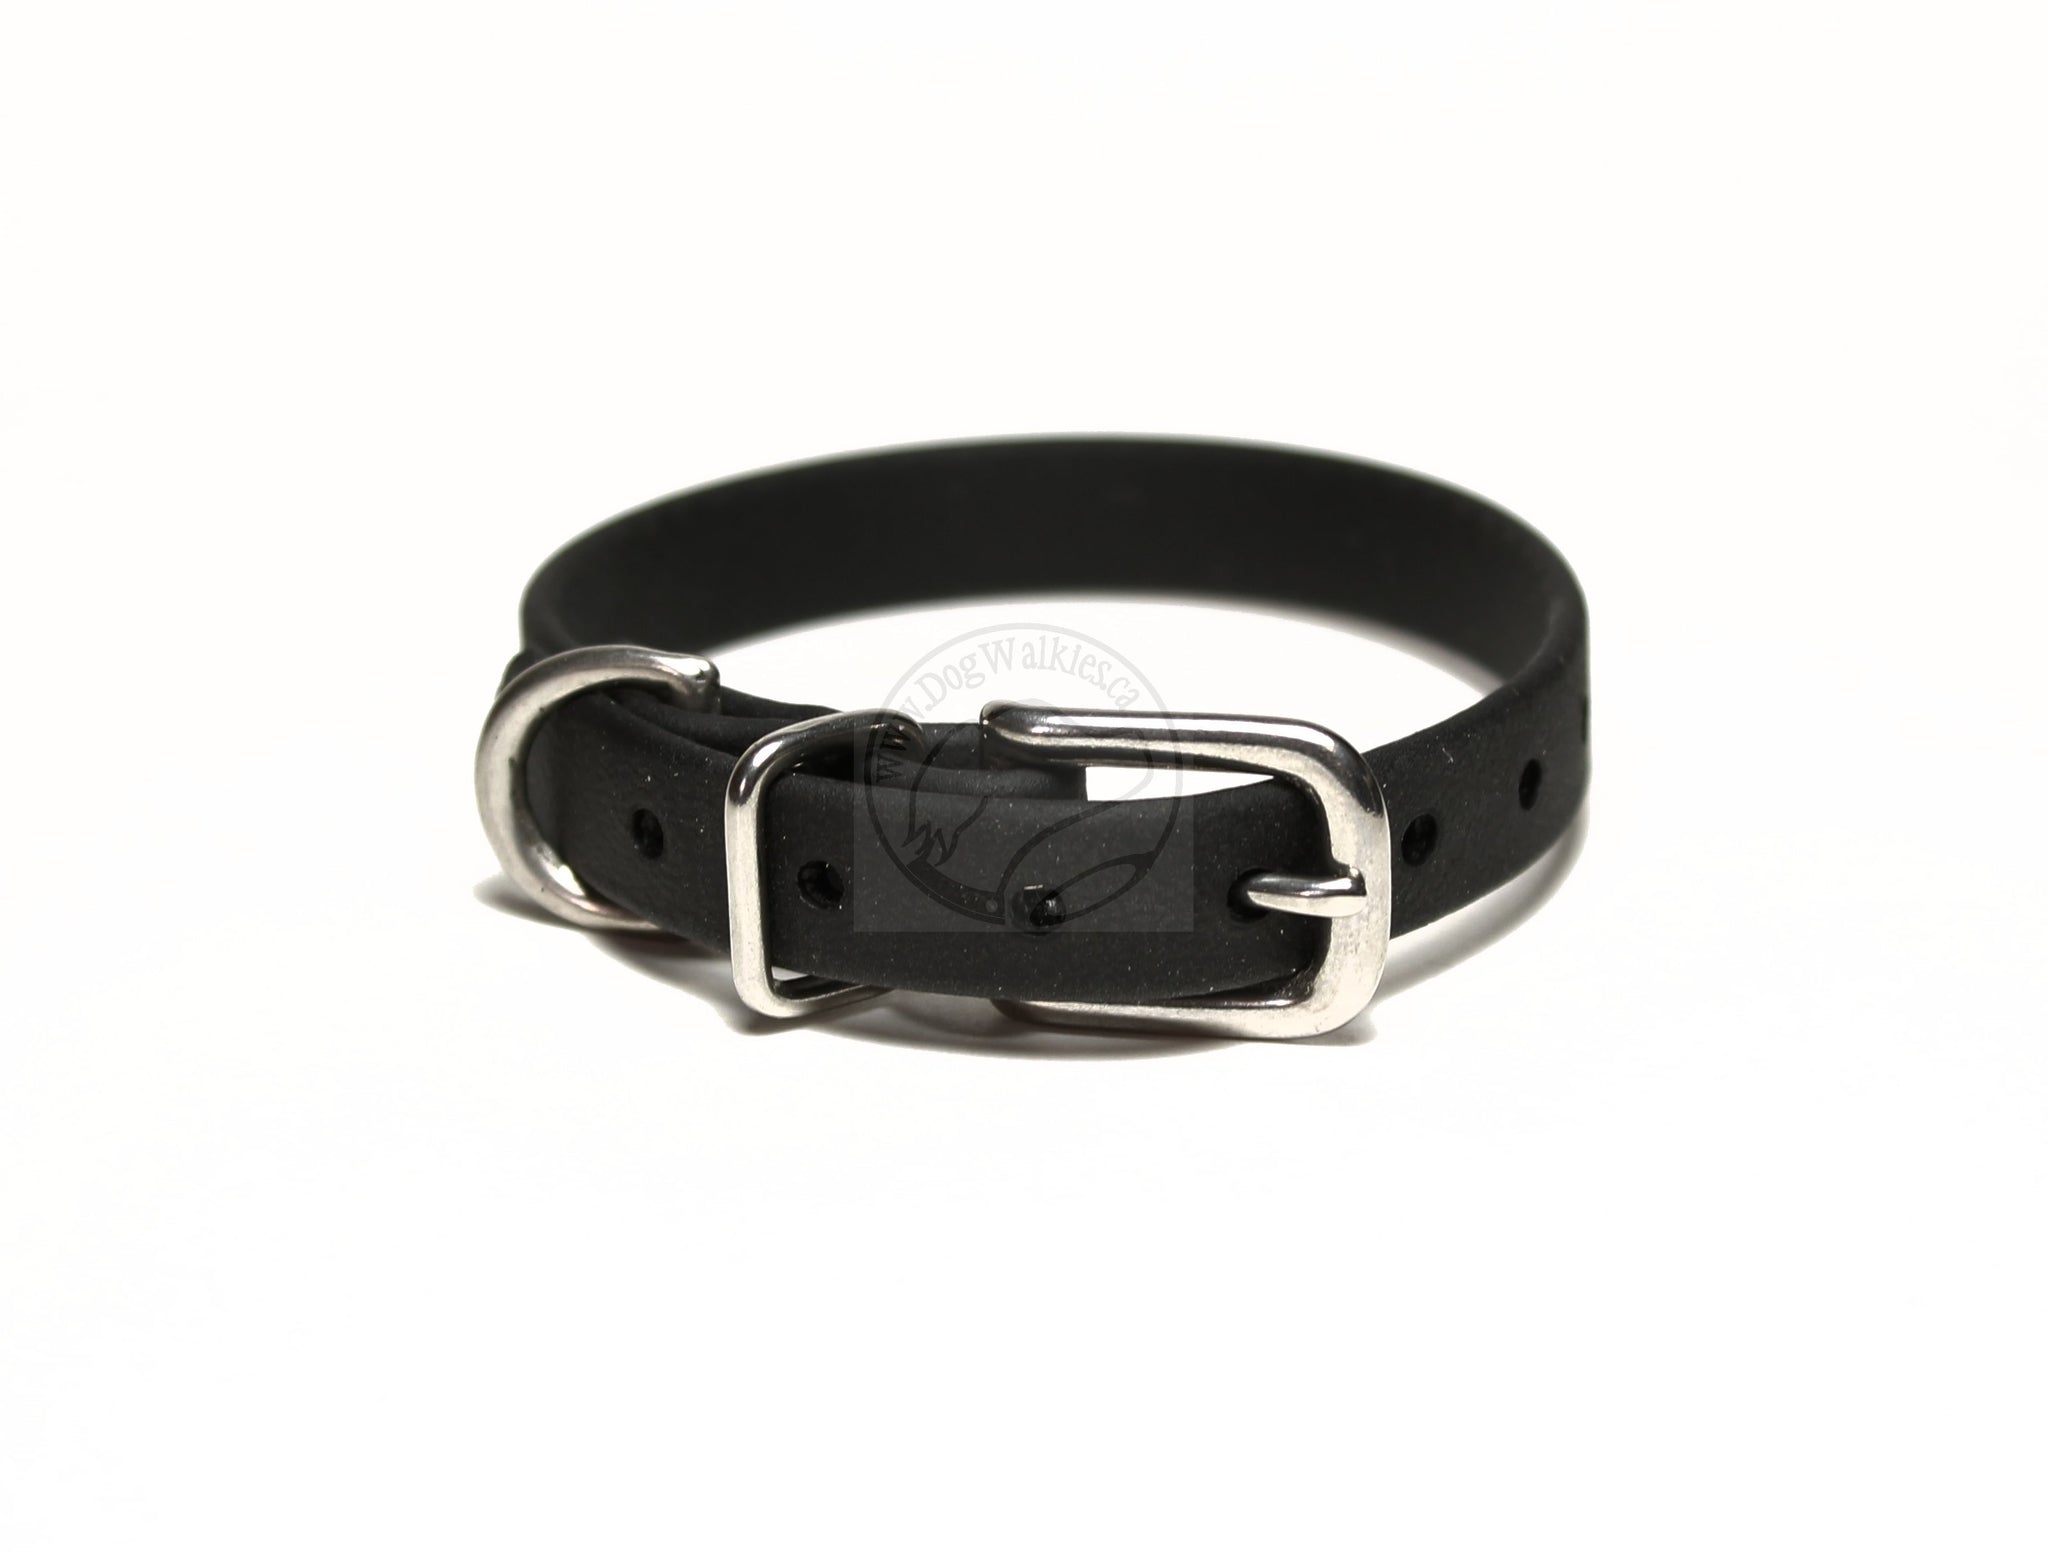 Jet Black Biothane Small Dog Collar - 1/2" (12mm) wide